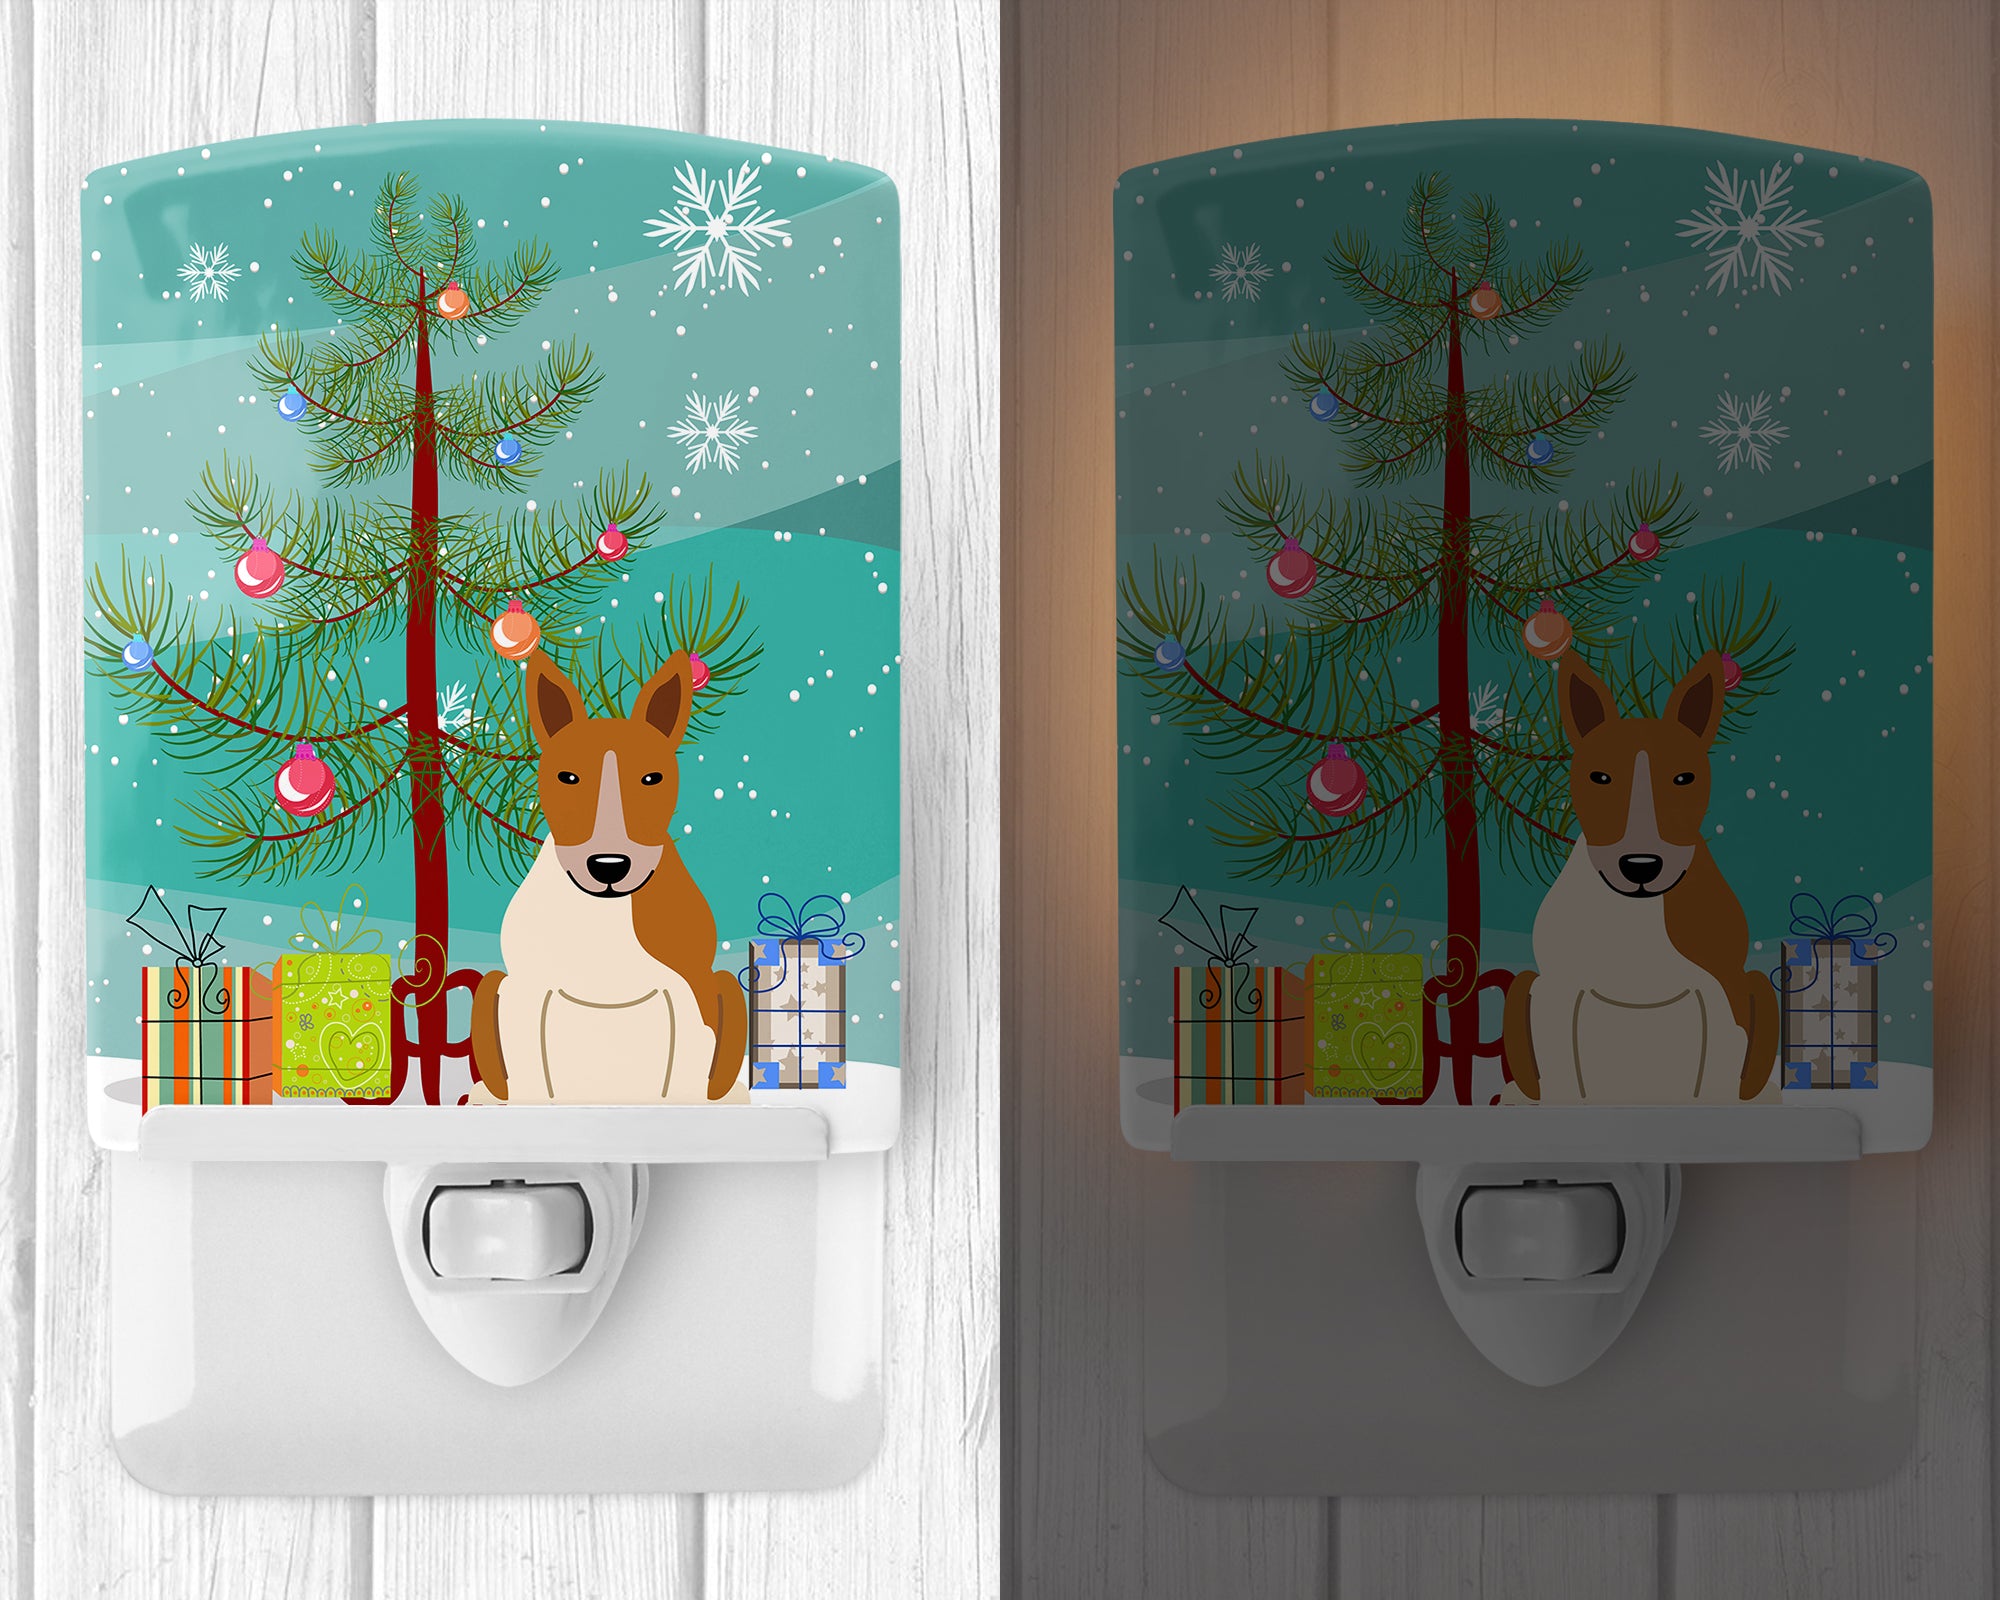 Merry Christmas Tree Bull Terrier Red White Ceramic Night Light BB4260CNL - the-store.com